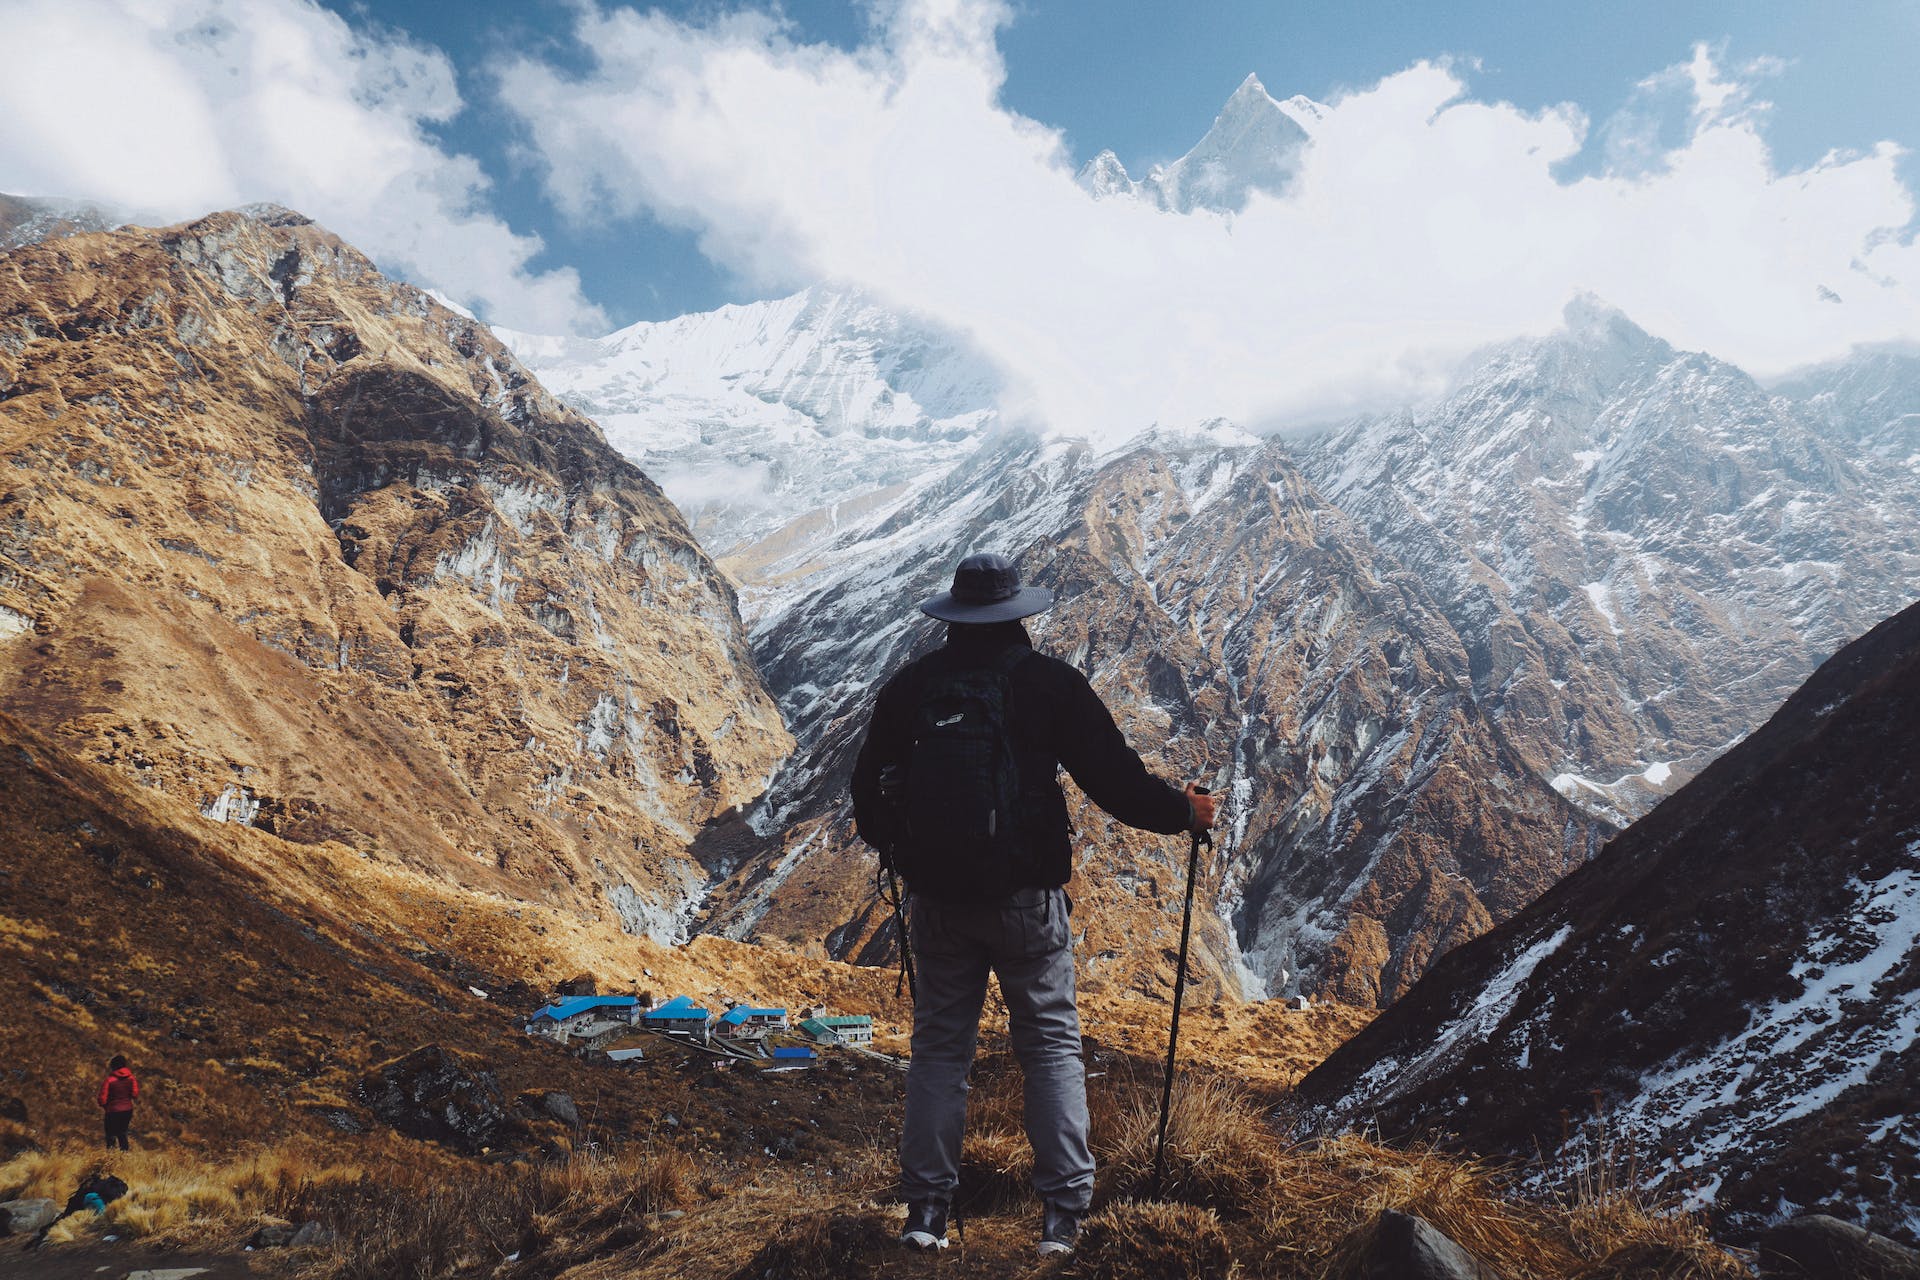 Guidelines for responsible trekking in Nepal